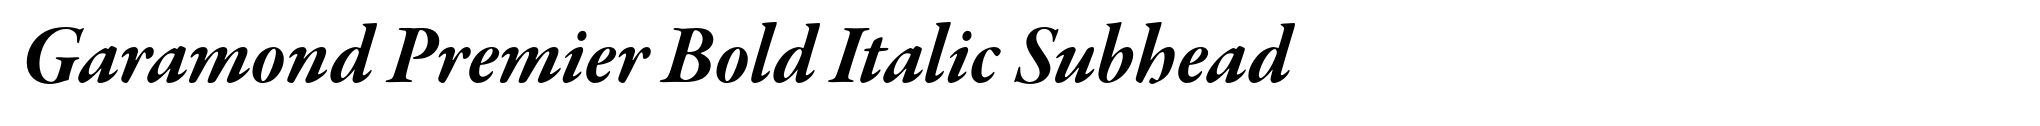 Garamond Premier Bold Italic Subhead image